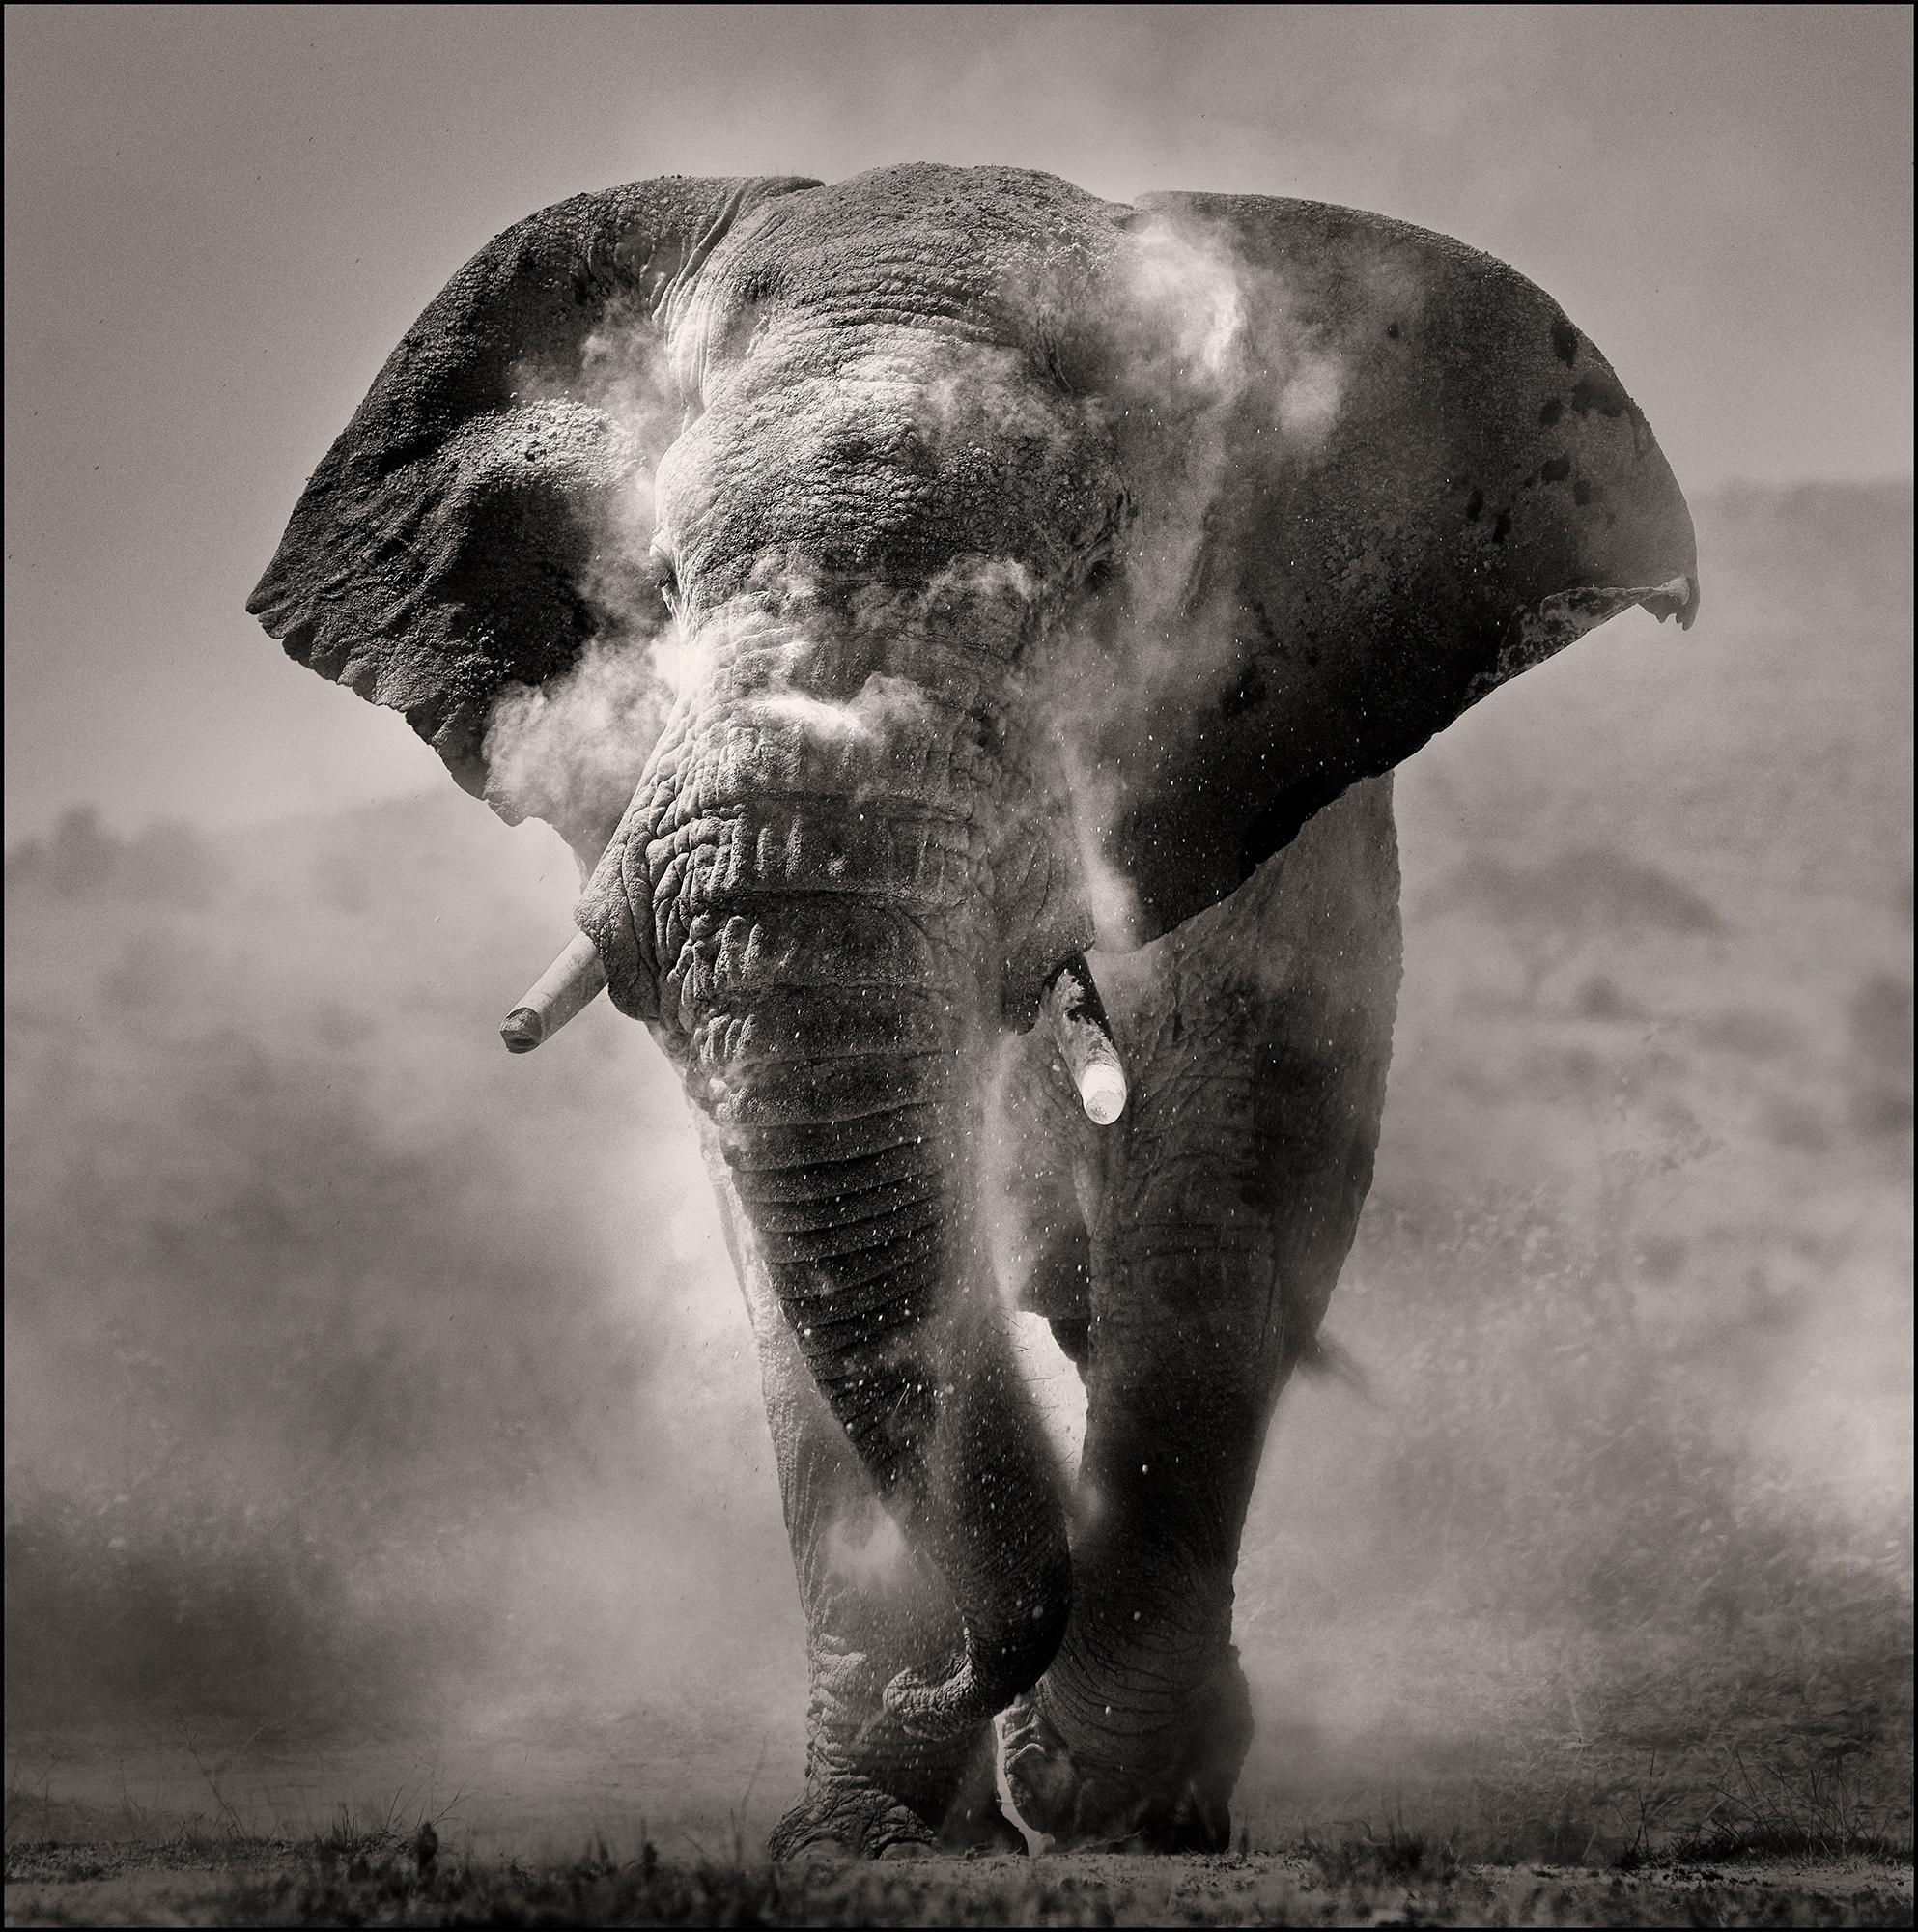 Joachim Schmeisser Portrait Photograph - Bull dusting II, Kenya, animal, wildlife, black and white photography, elephant